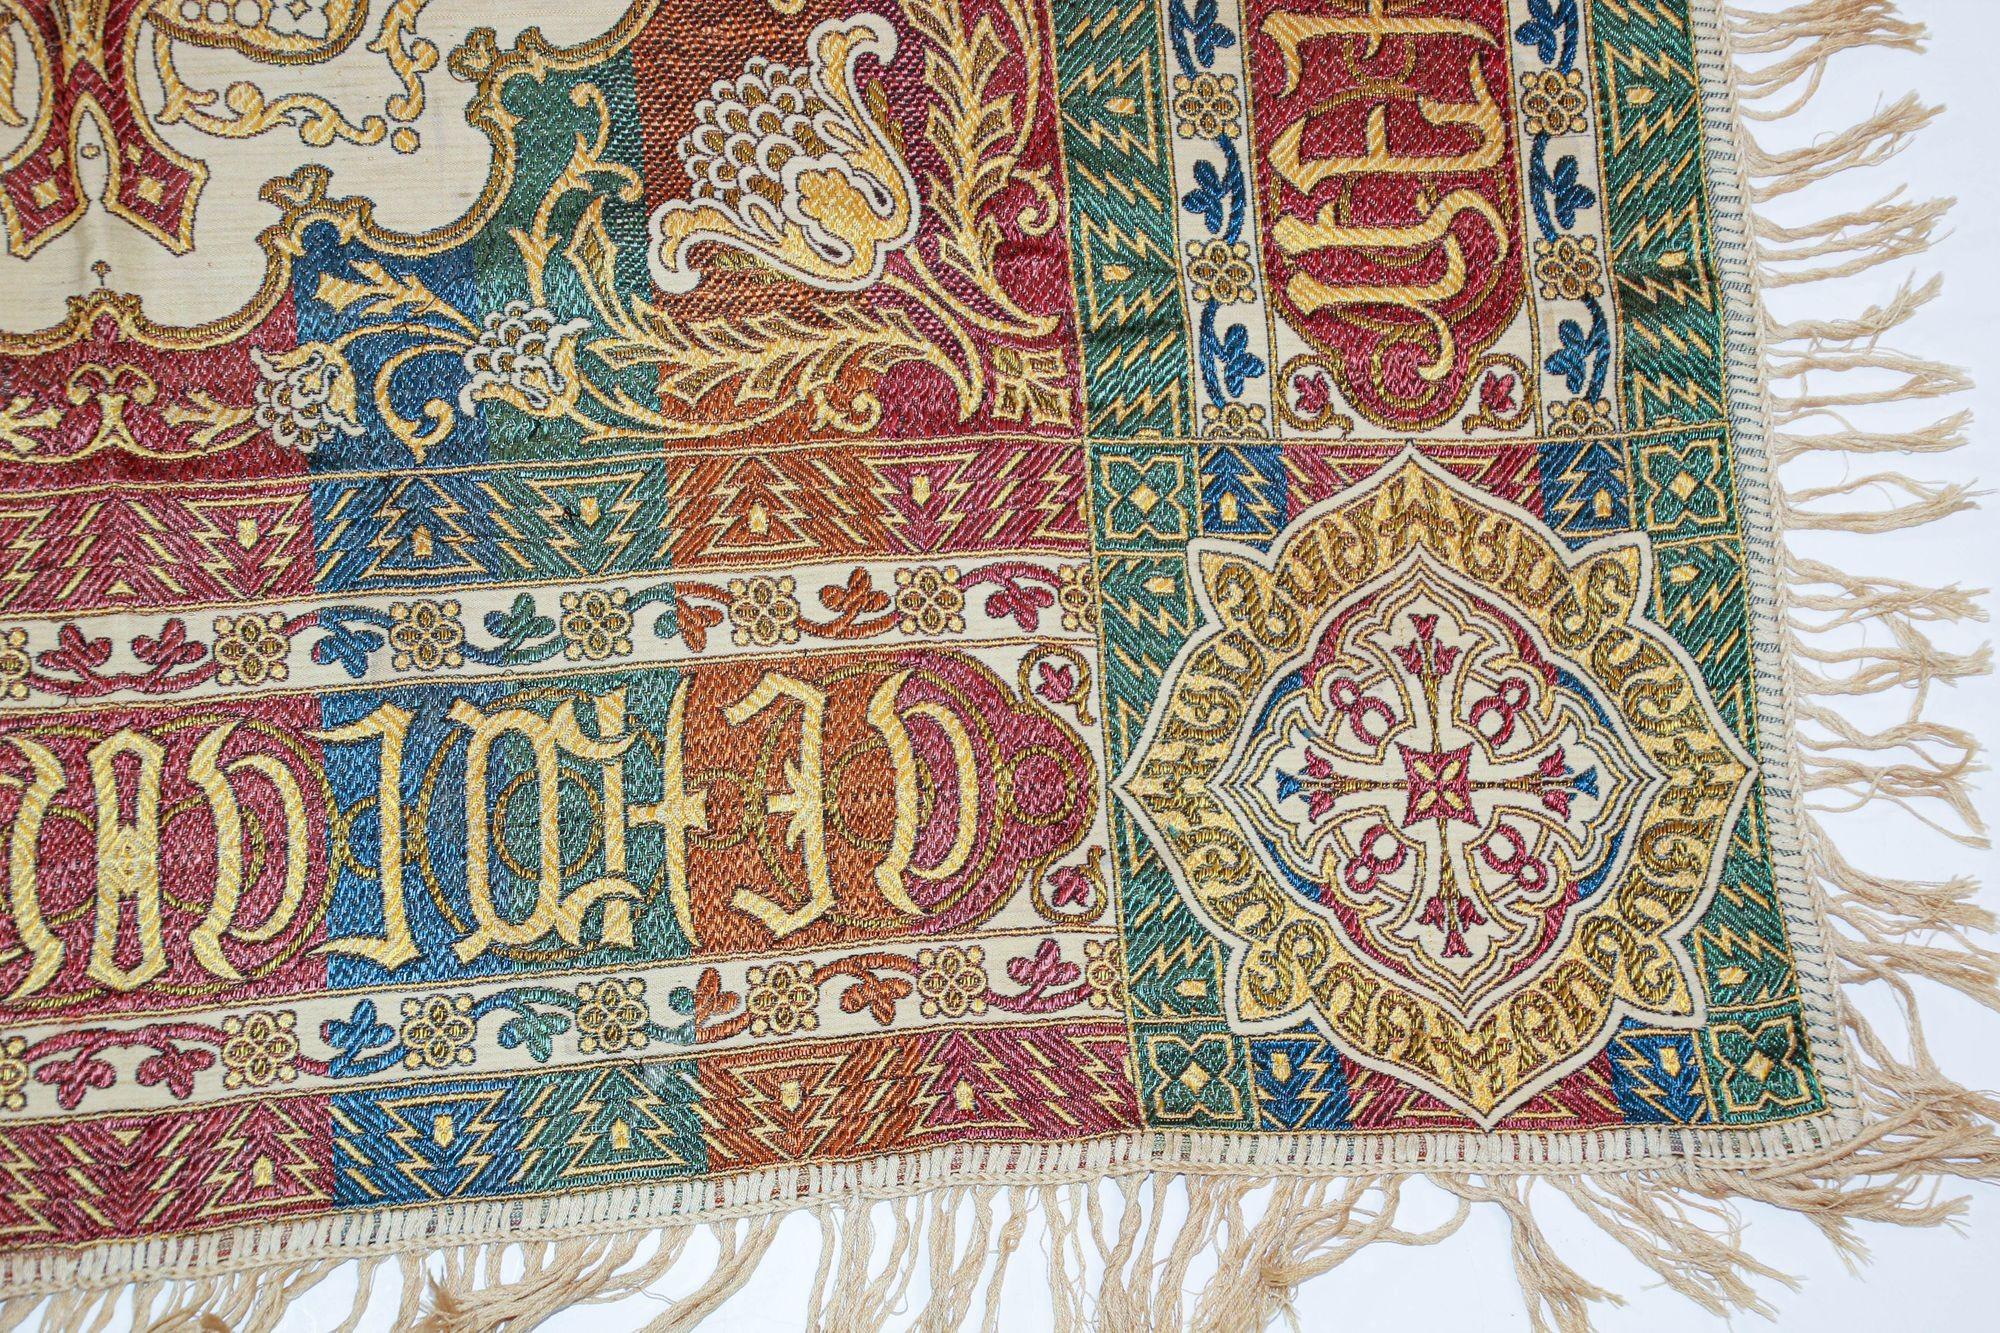 20th Century Antique Islamic Textile with Moorish Arabic Writing Granada Spain